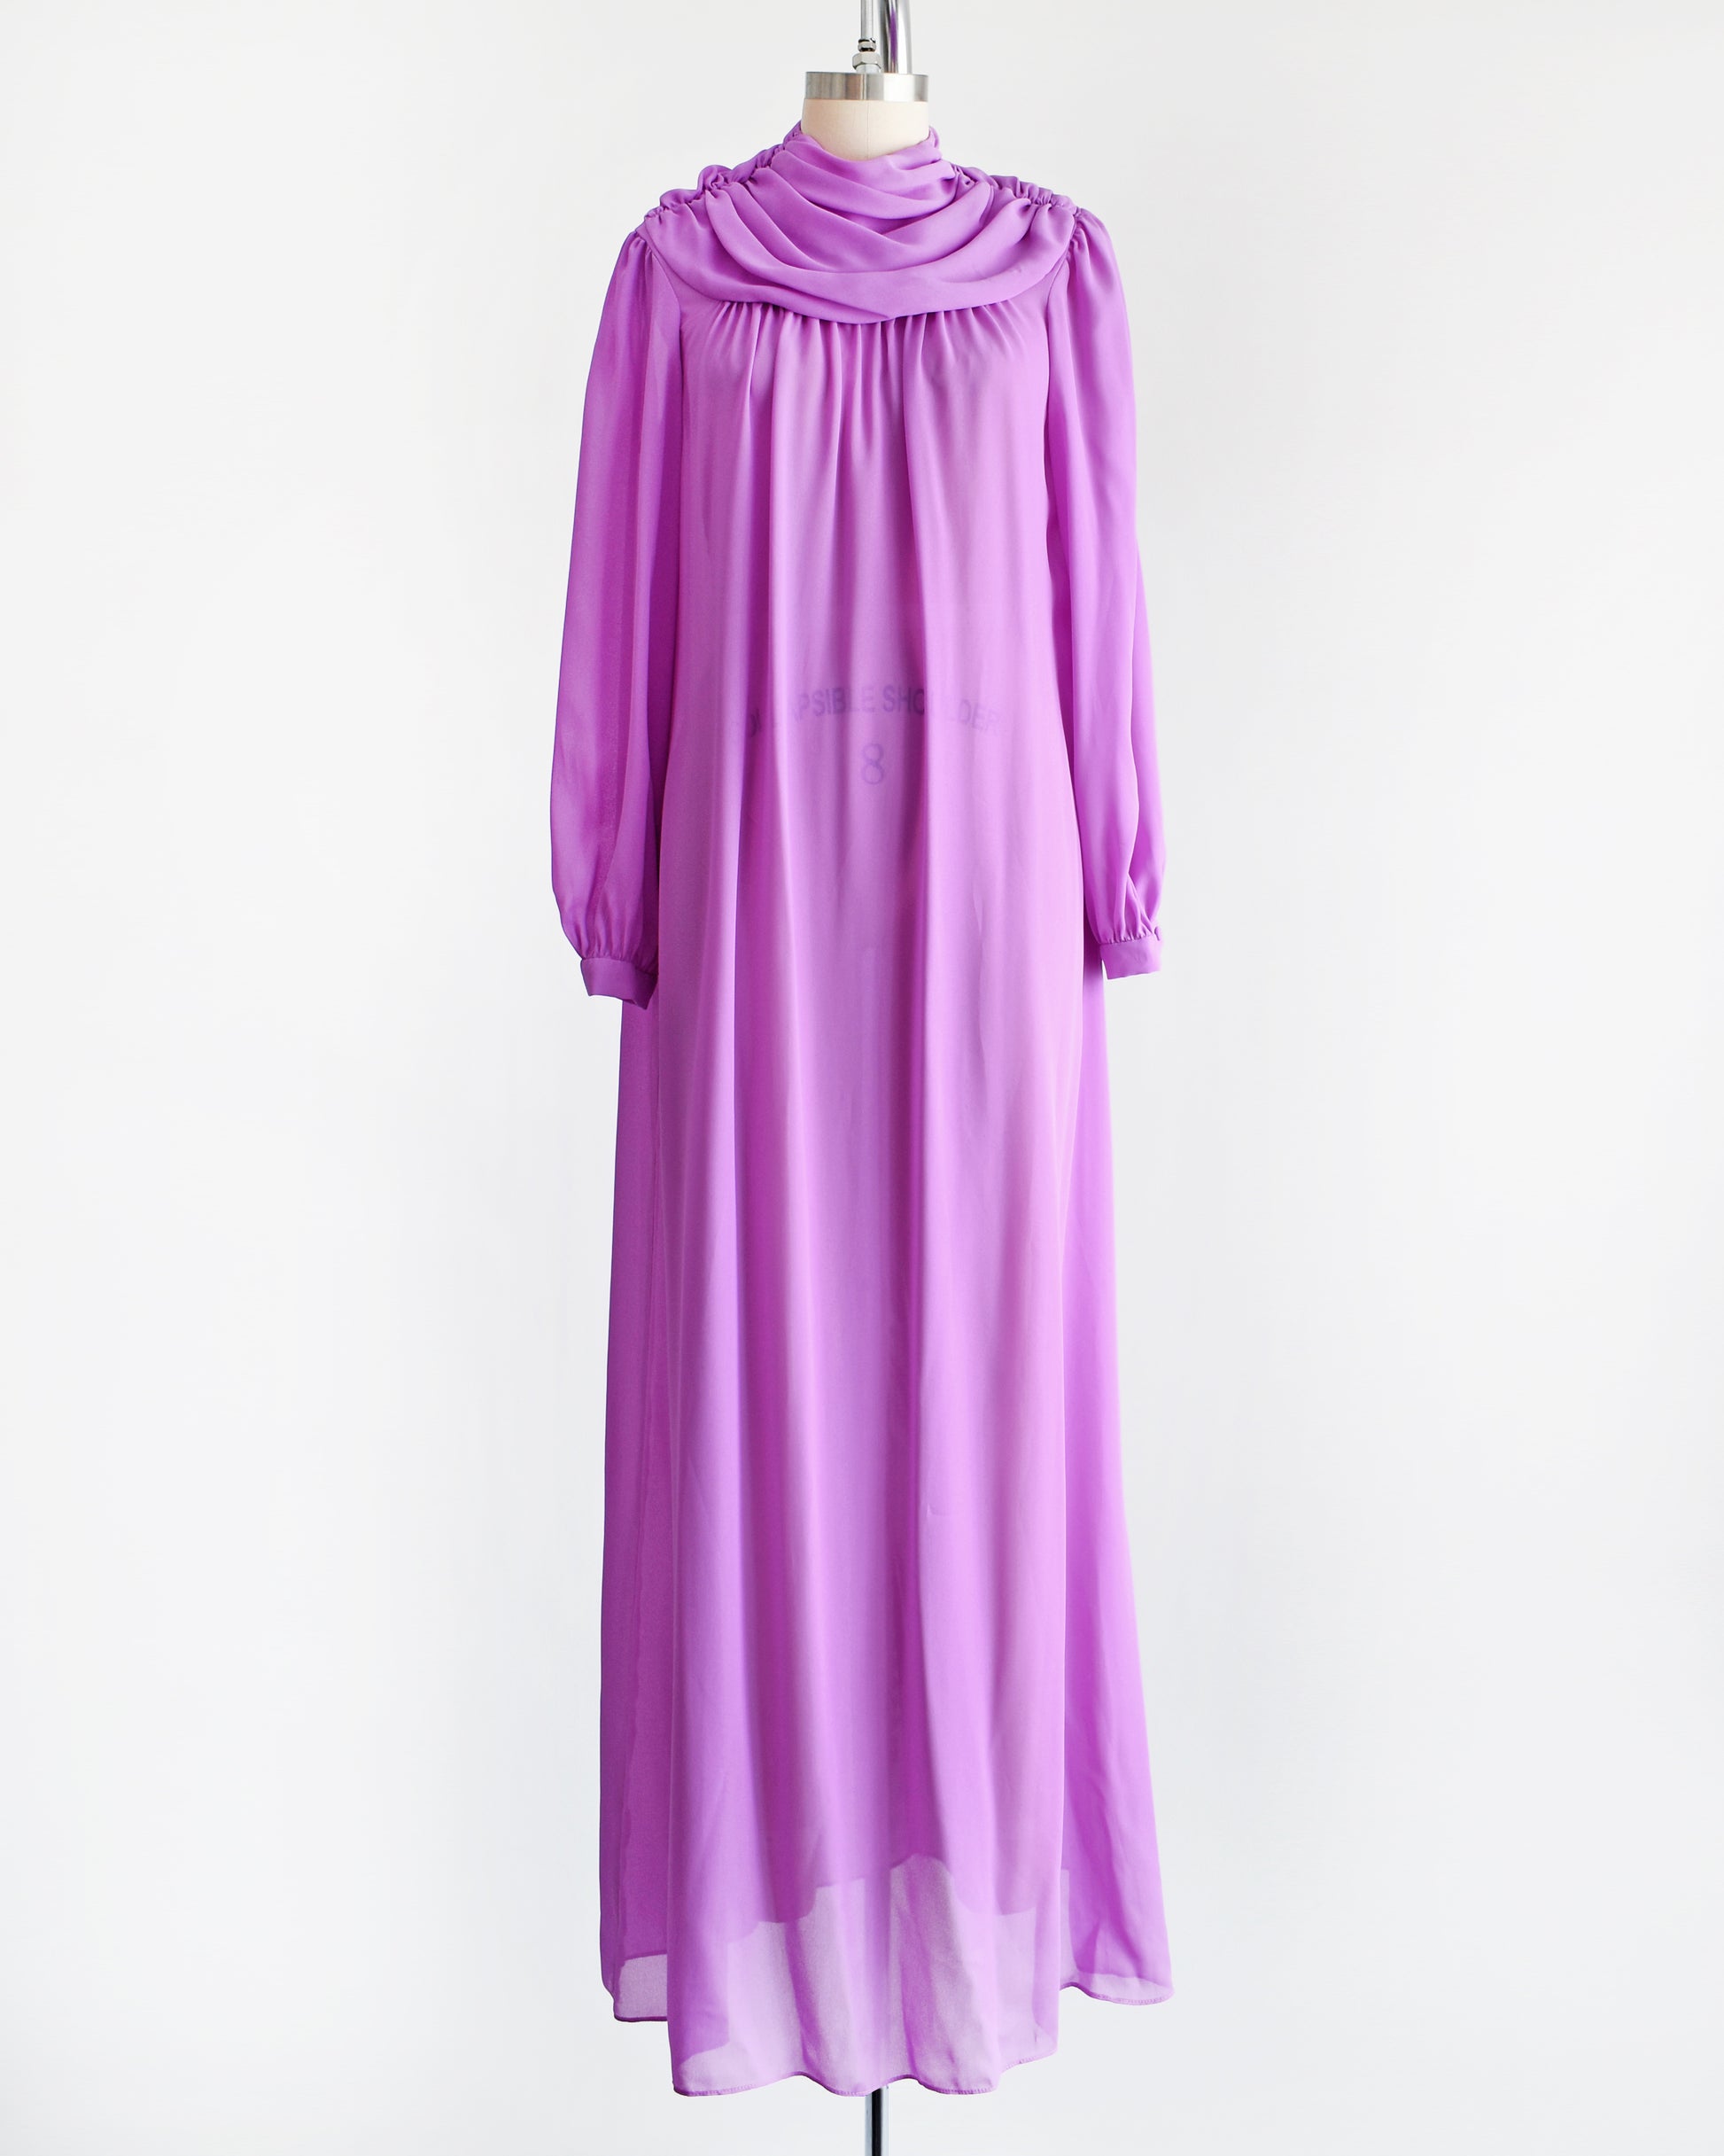 A vintage 1970s purple semi sheer maxi dress by Joy Stevens California that has a draped neckline and long sleeves